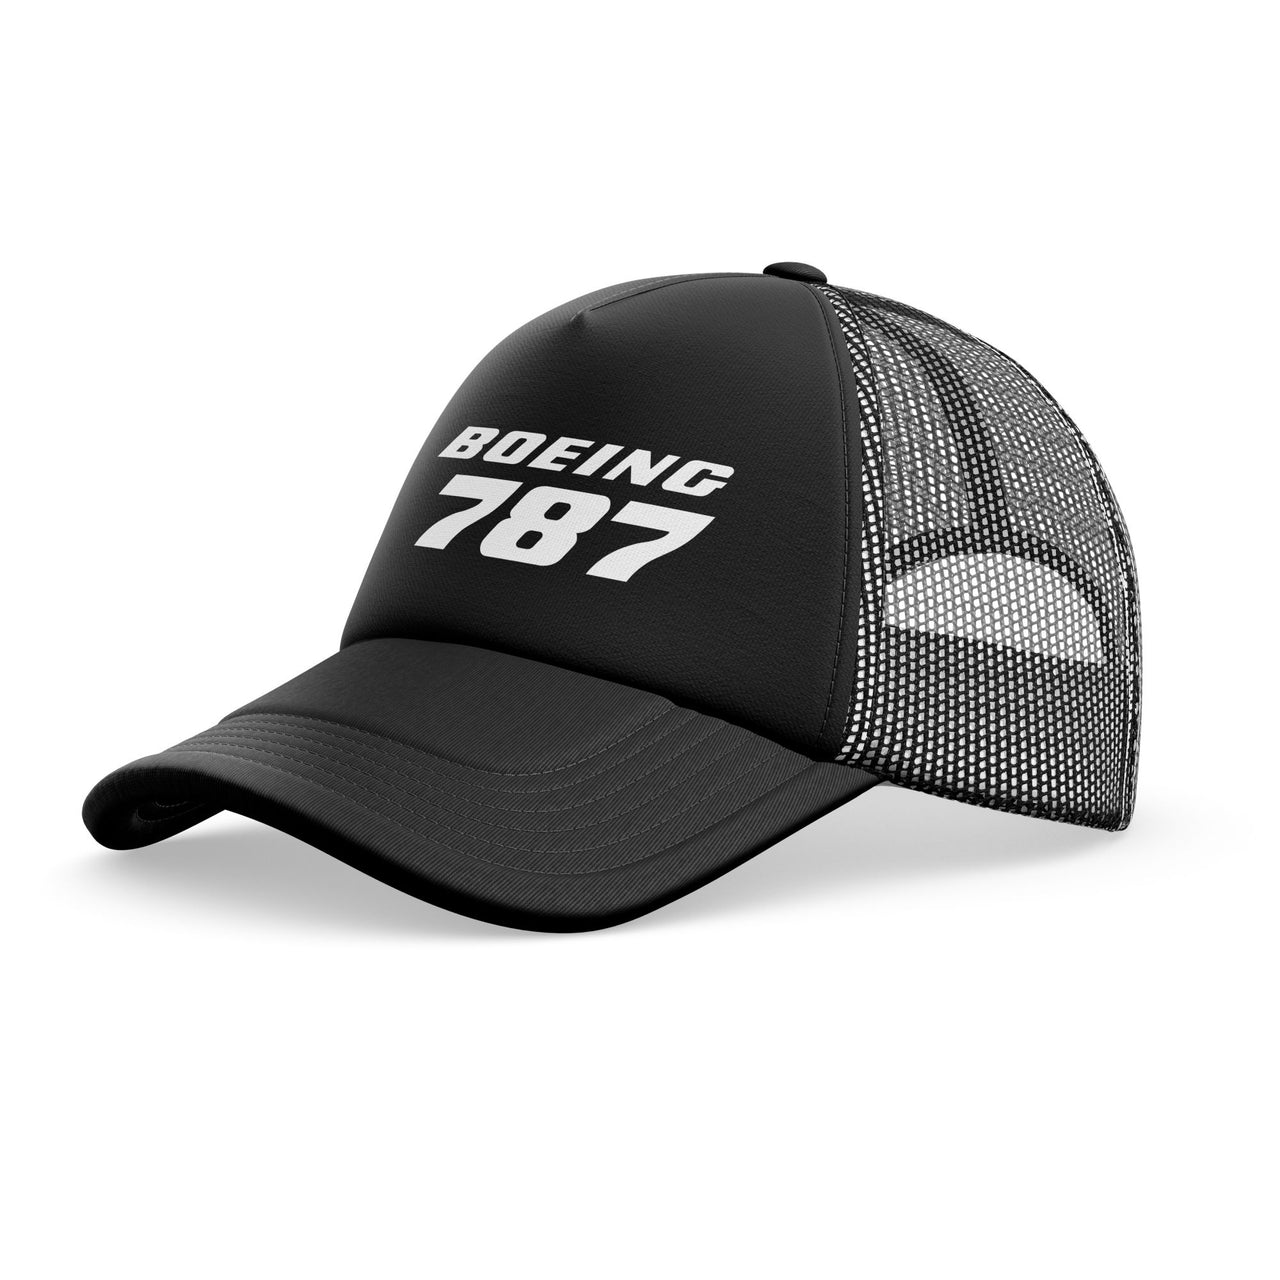 Boeing 787 & Text Designed Trucker Caps & Hats